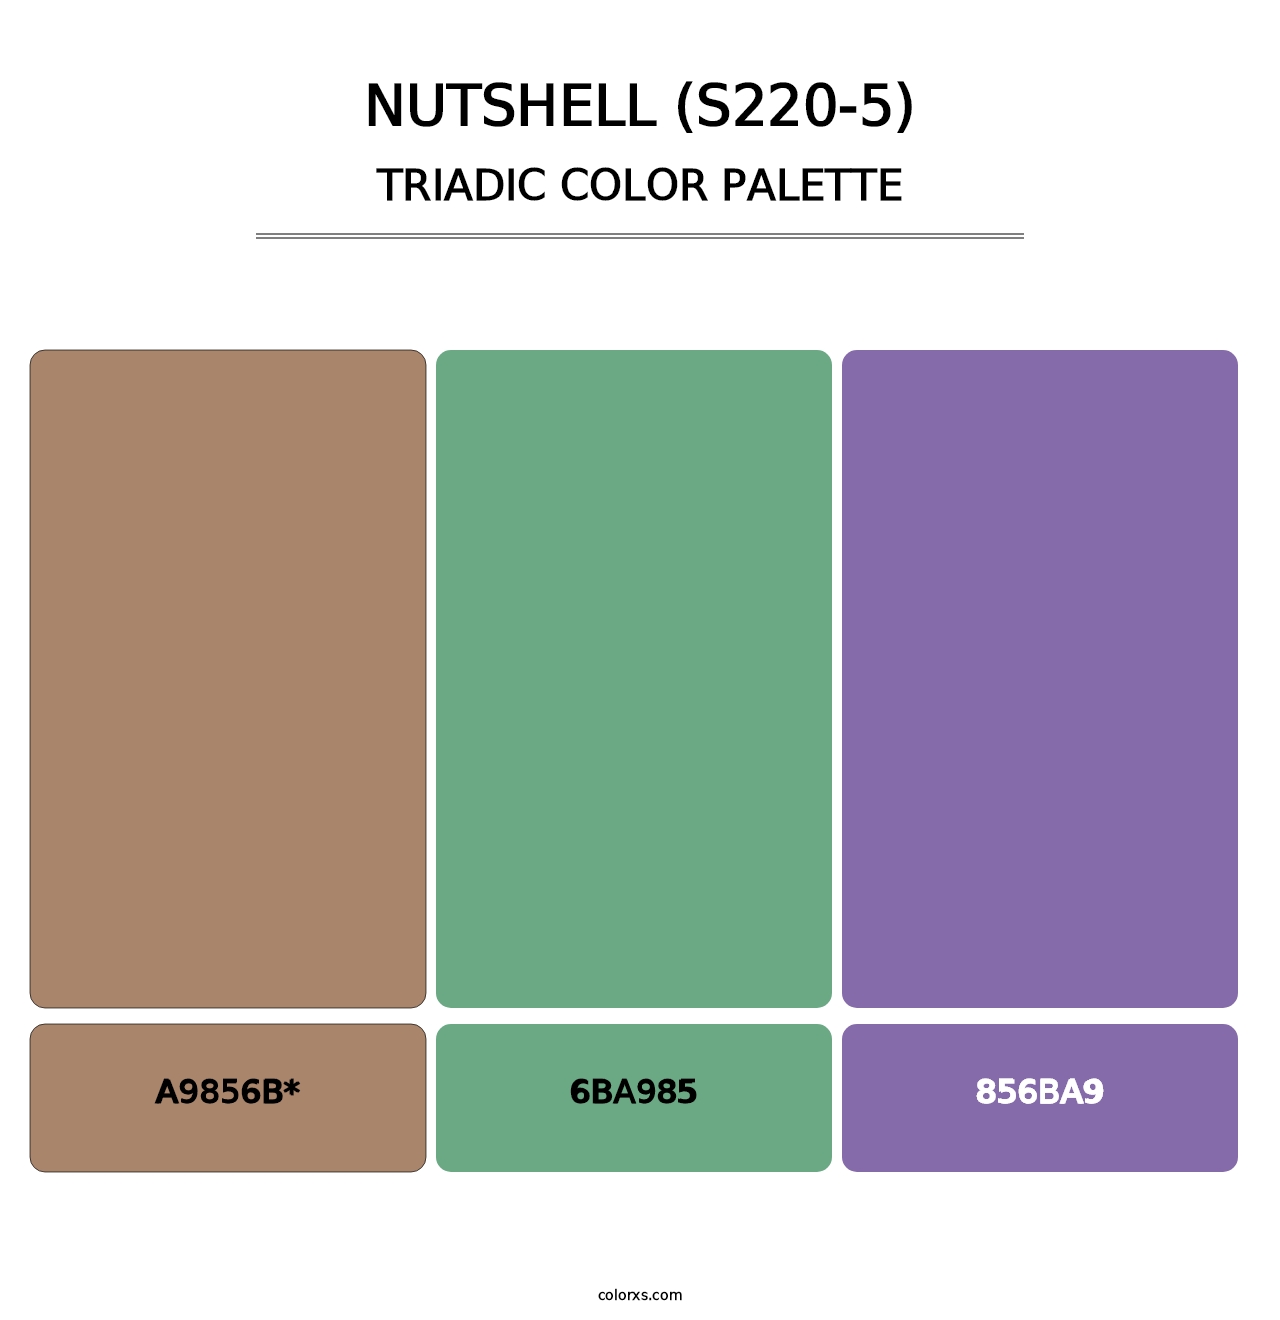 Nutshell (S220-5) - Triadic Color Palette